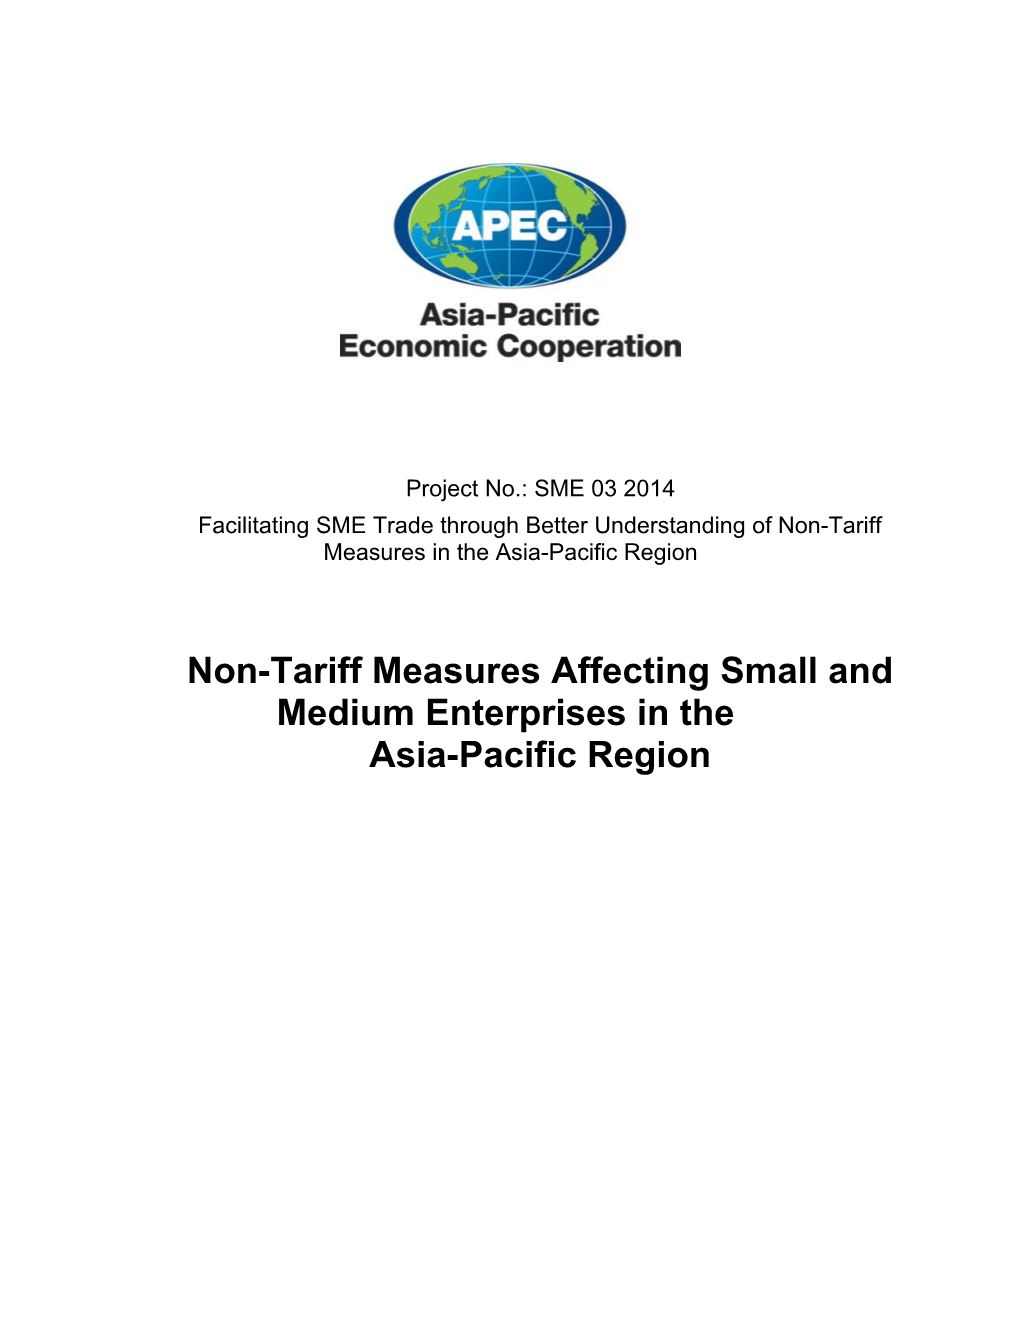 Non-Tariff Measures Affecting Small and Medium Enterprises in The